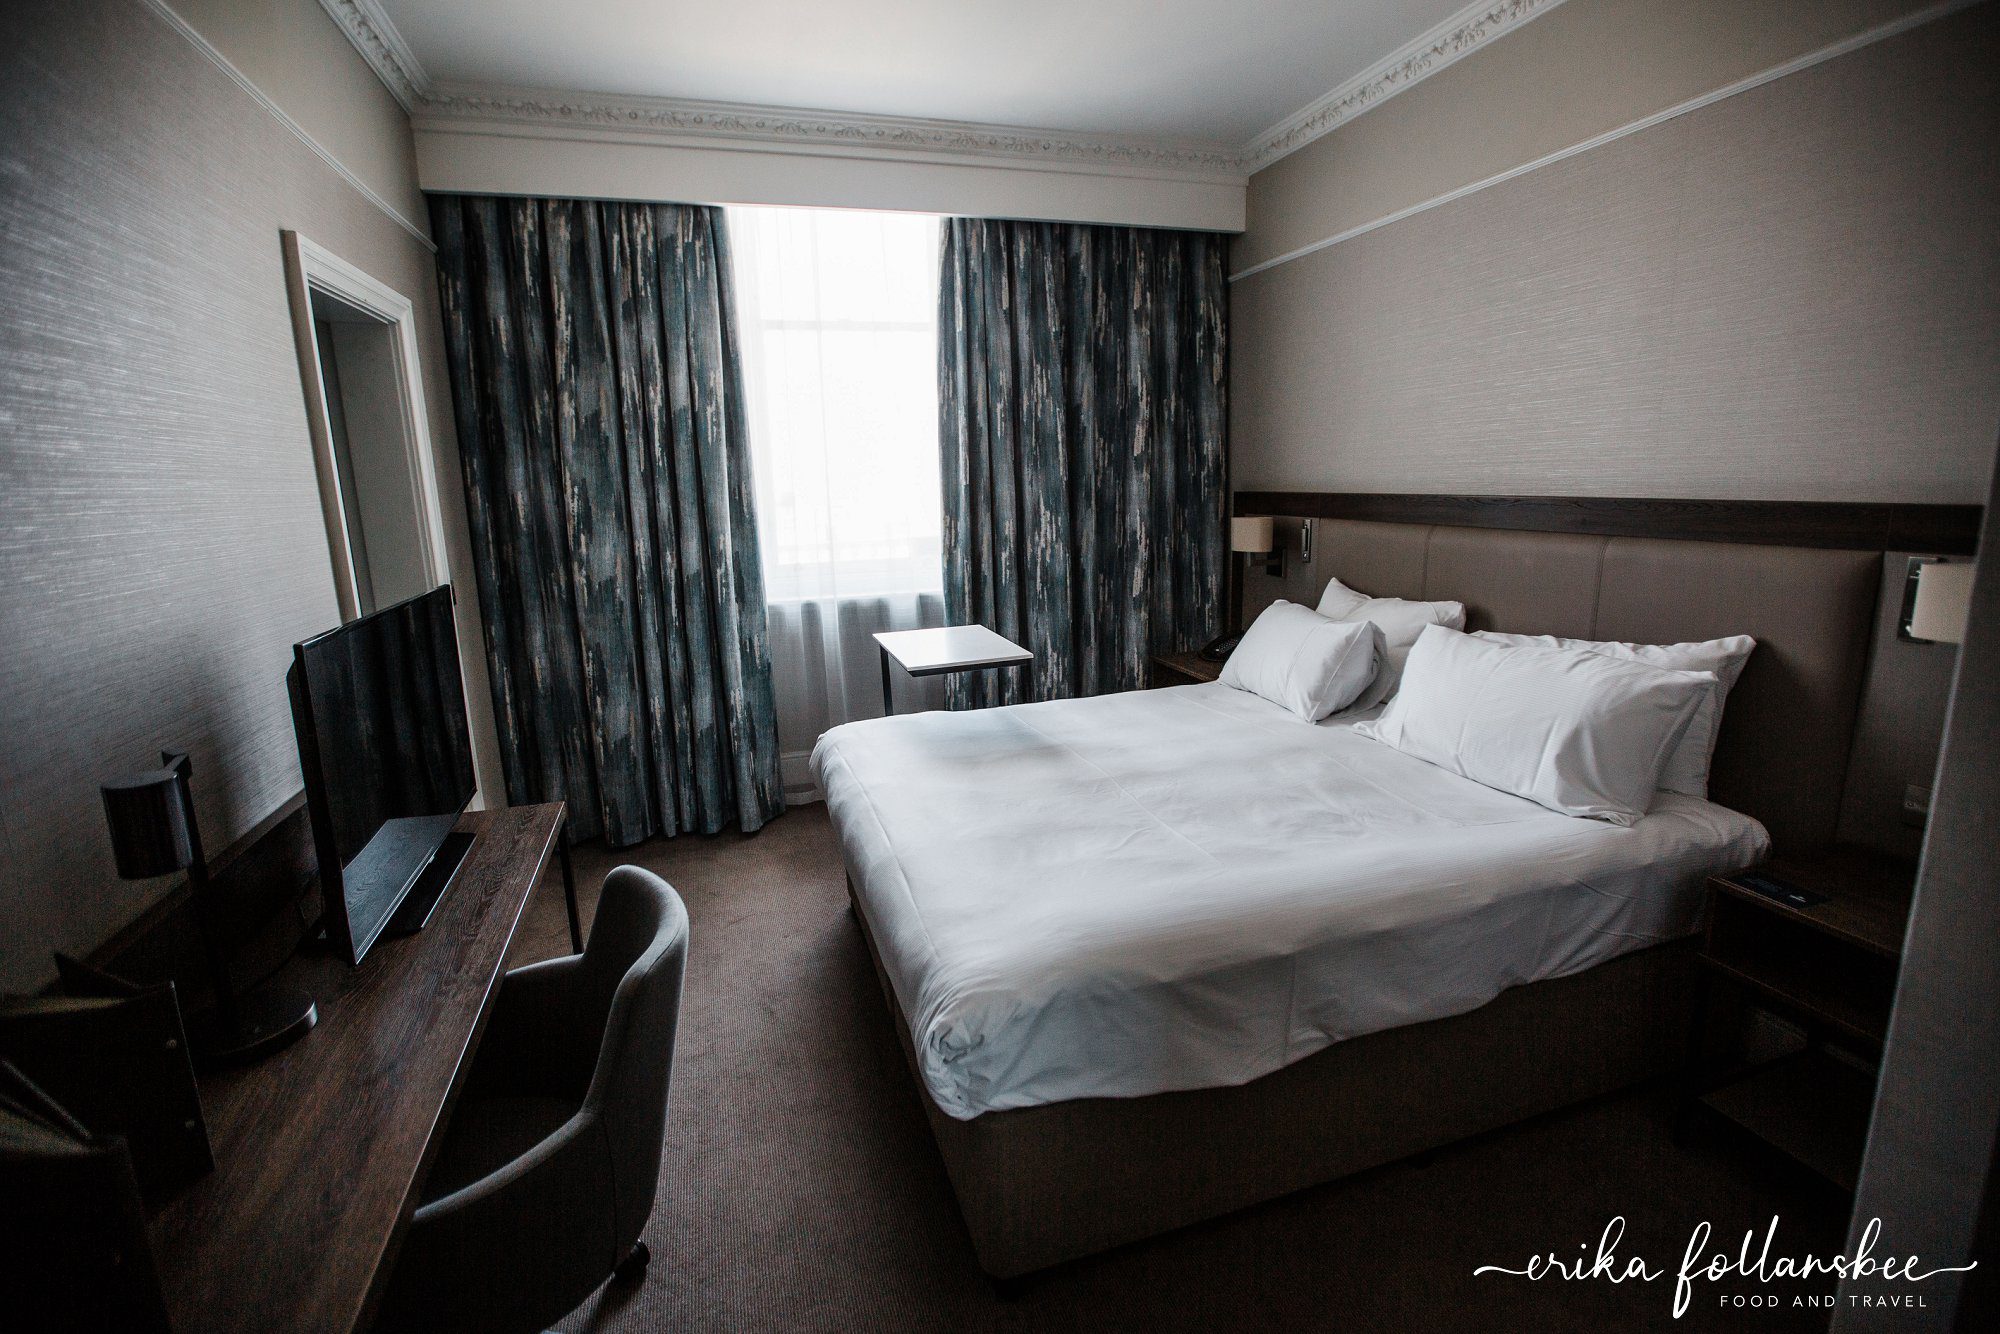 Room on the 5th floor of the Hilton Edinburgh Carlton